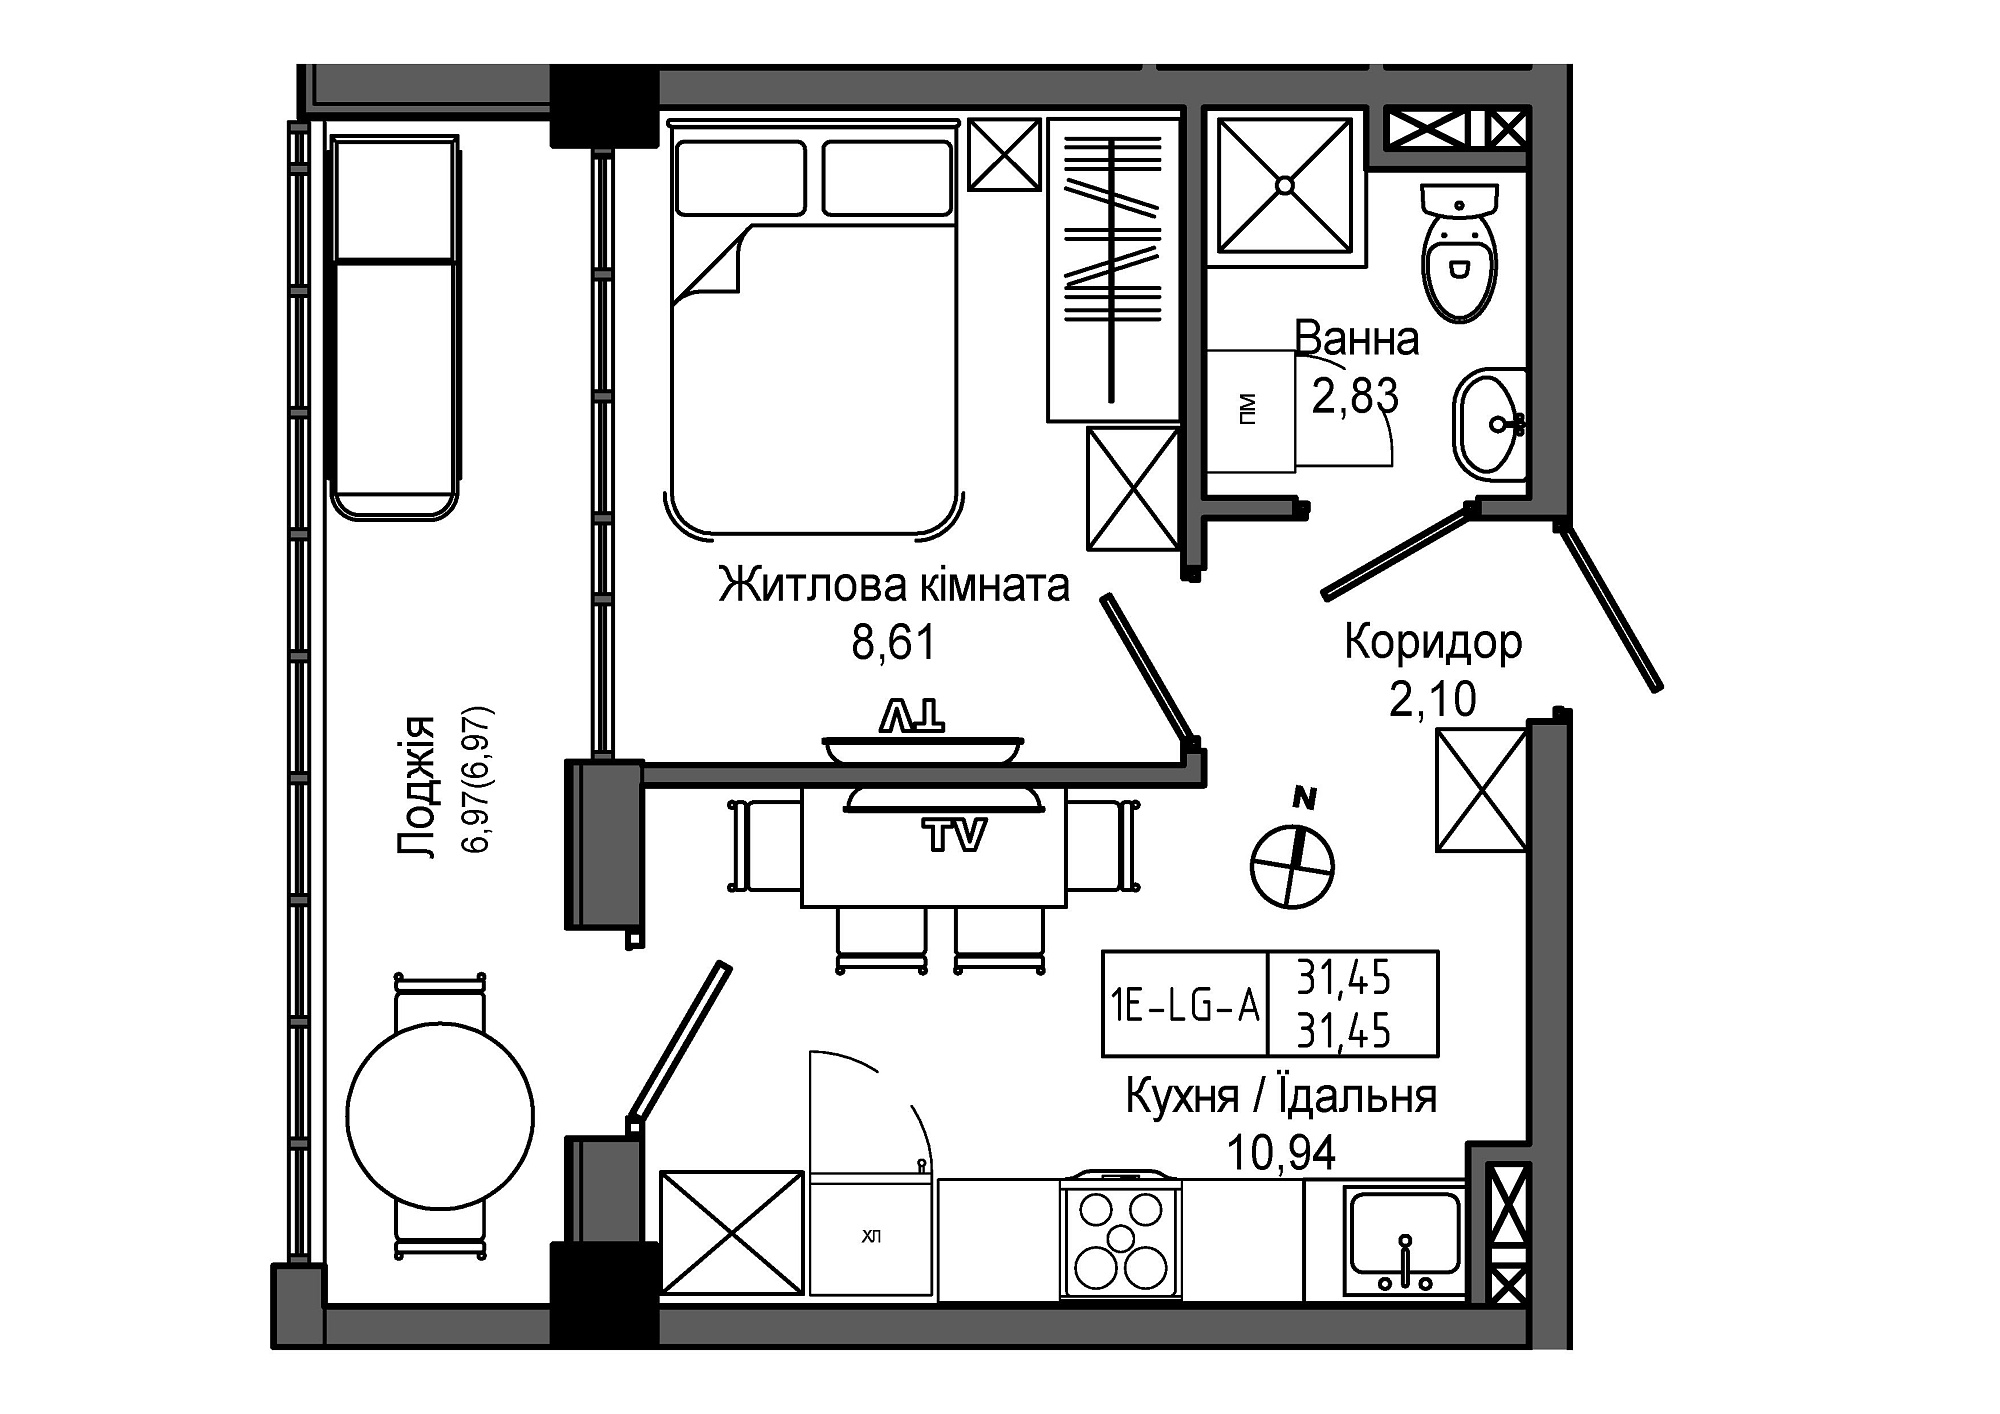 Planning 1-rm flats area 31.45m2, UM-006-00/0011.